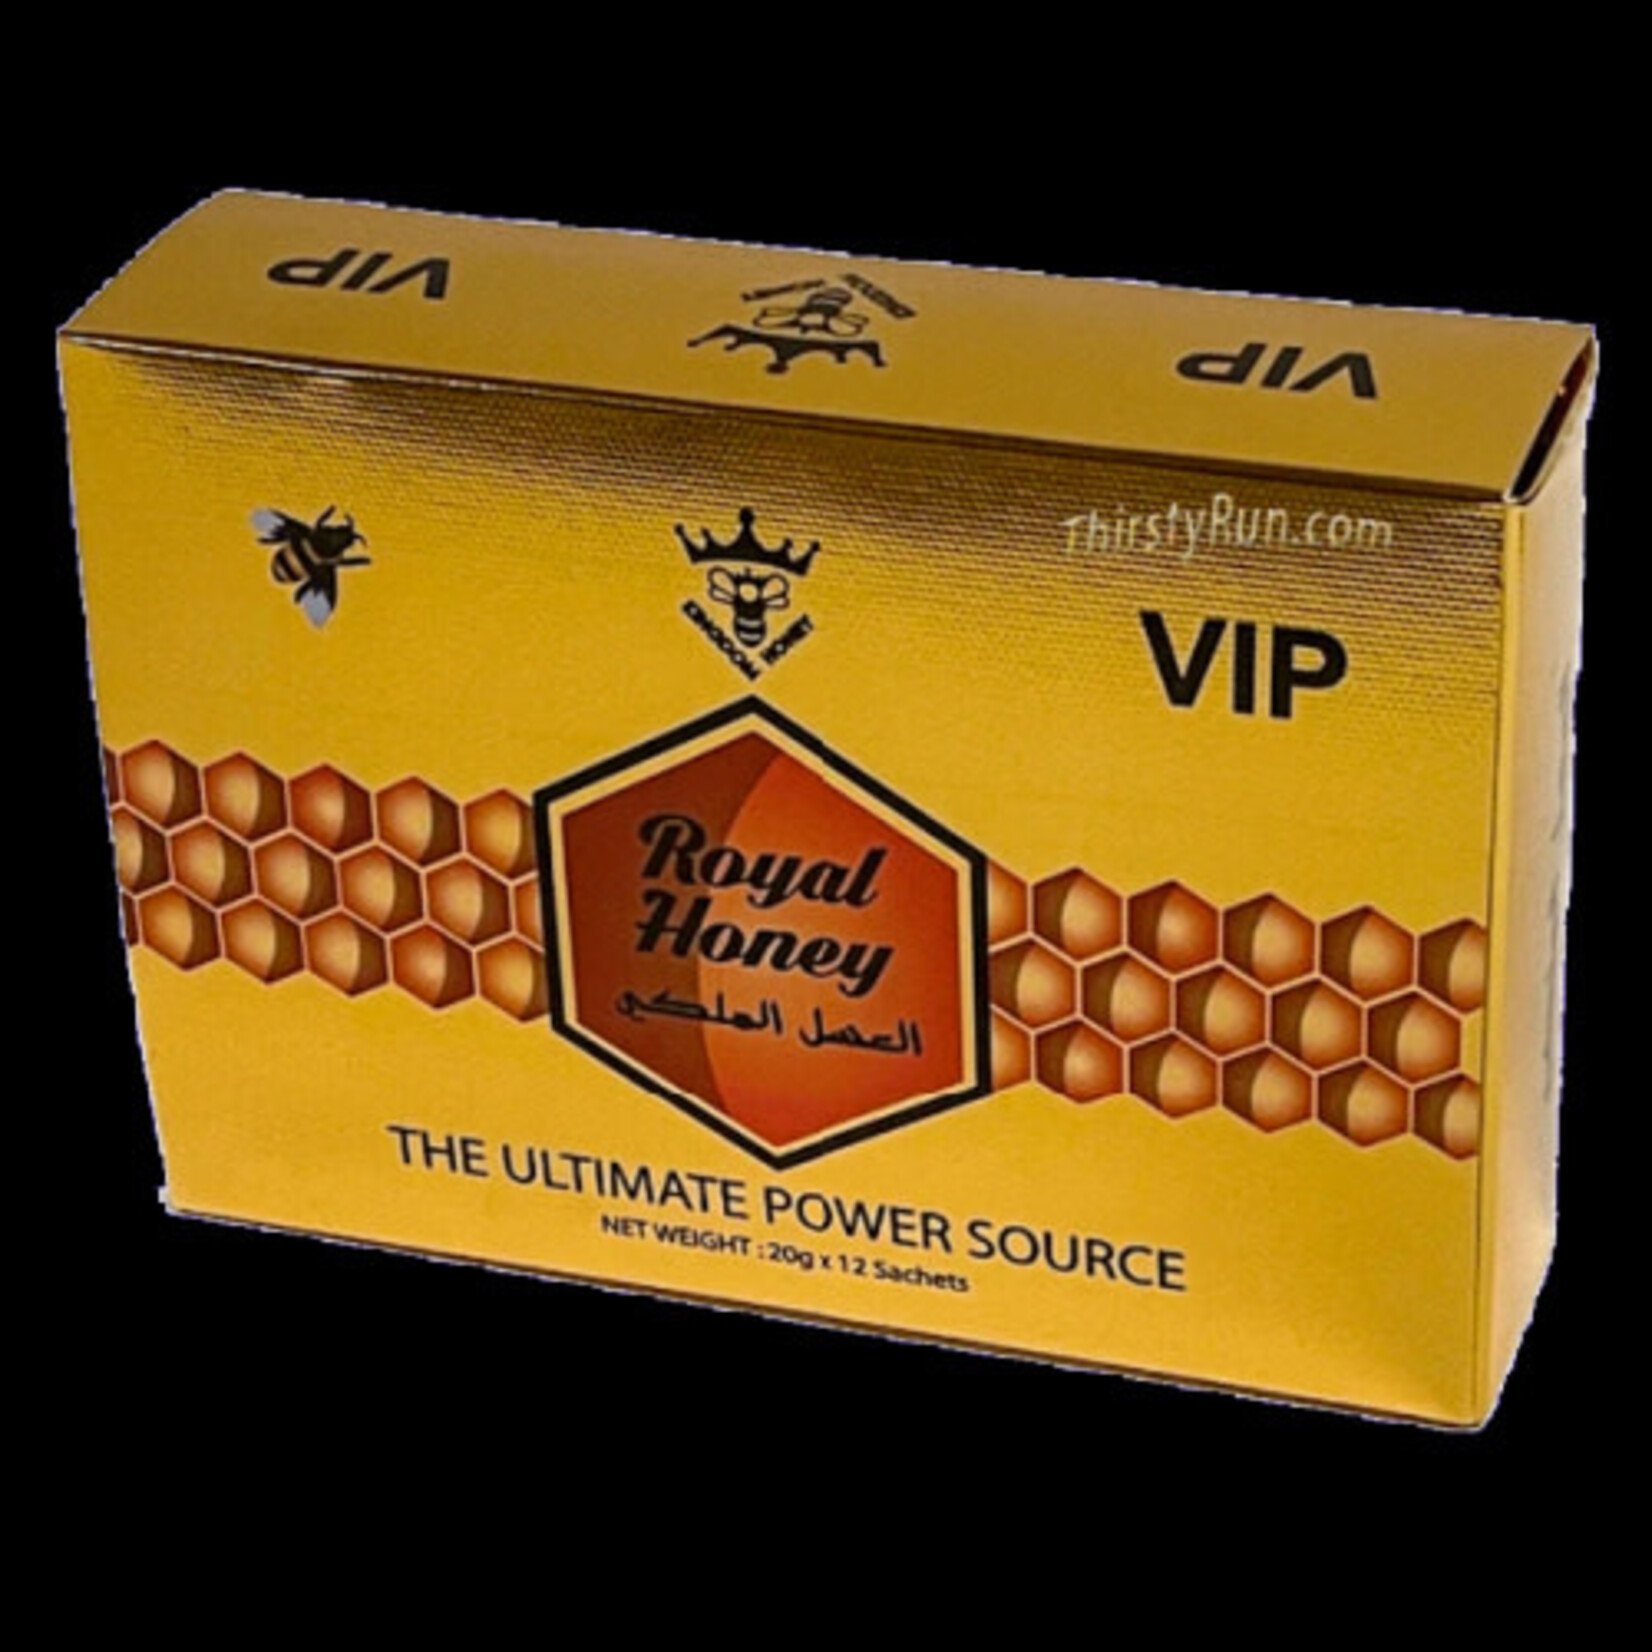 Kingdom Honey VIP Royal Honey - Ultimate Power Source - 20g. Sachet